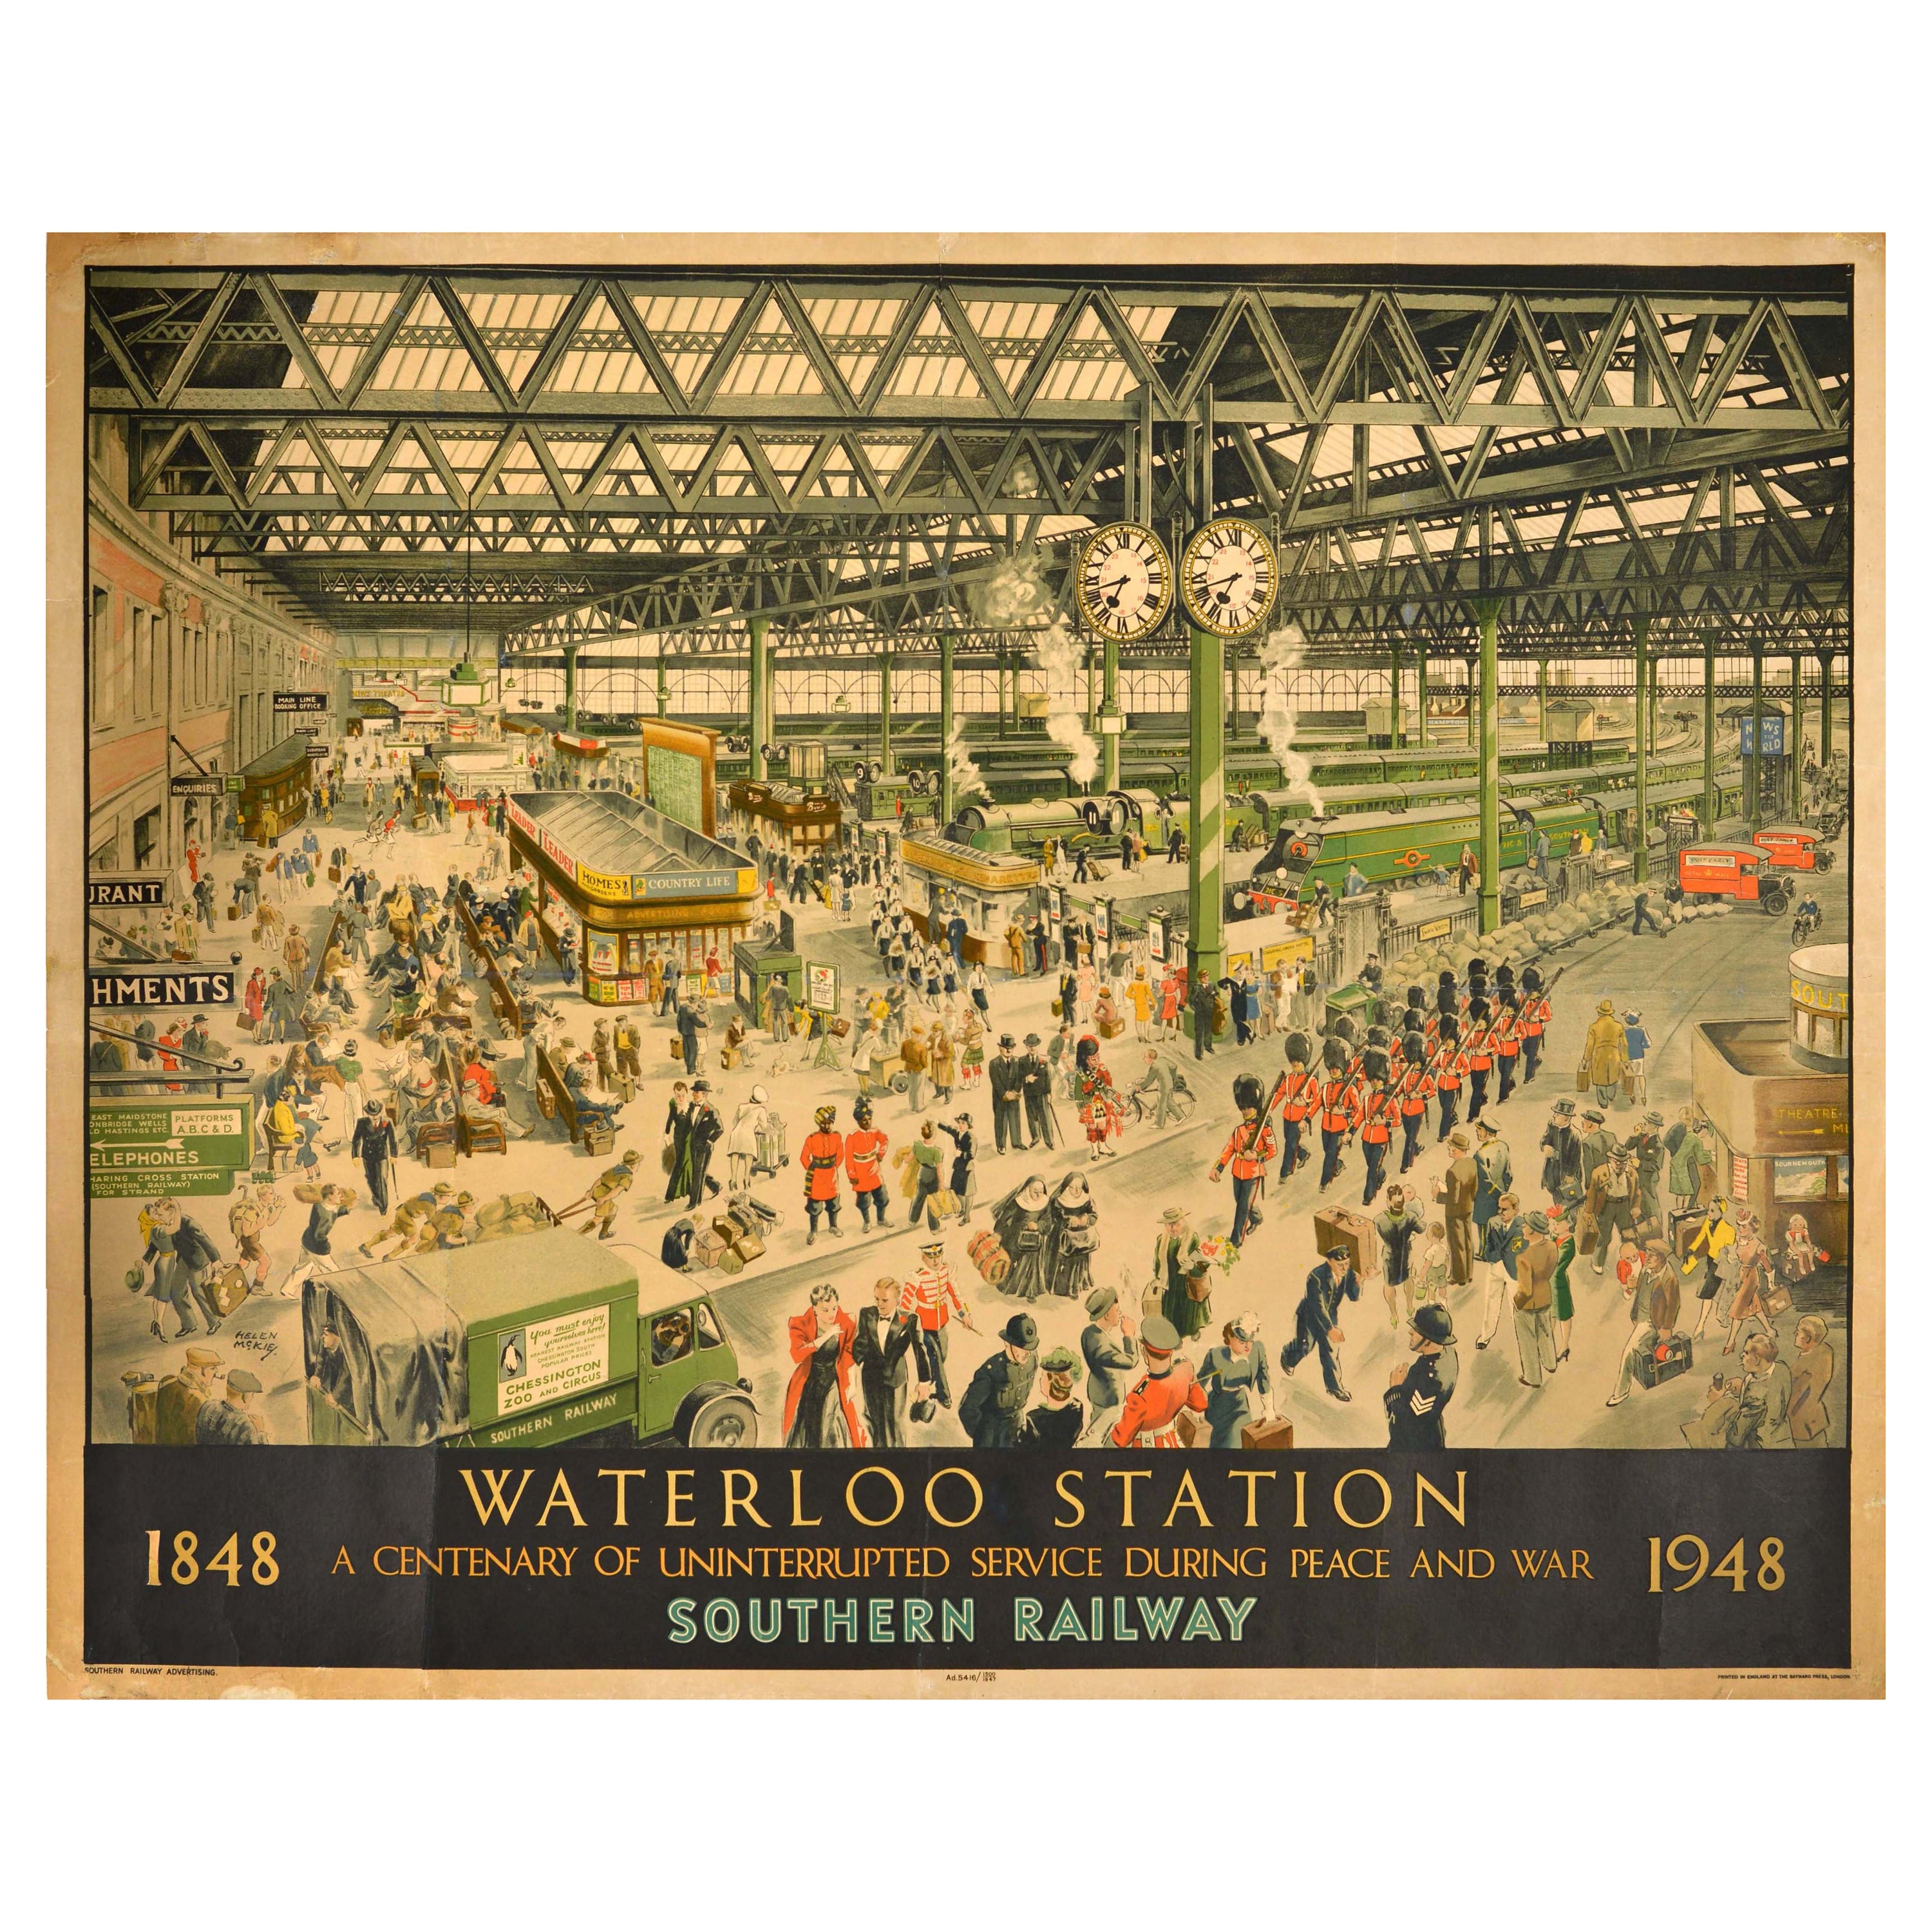 Affiche publicitaire originale de voyage Waterloo Station Southern Railway en vente